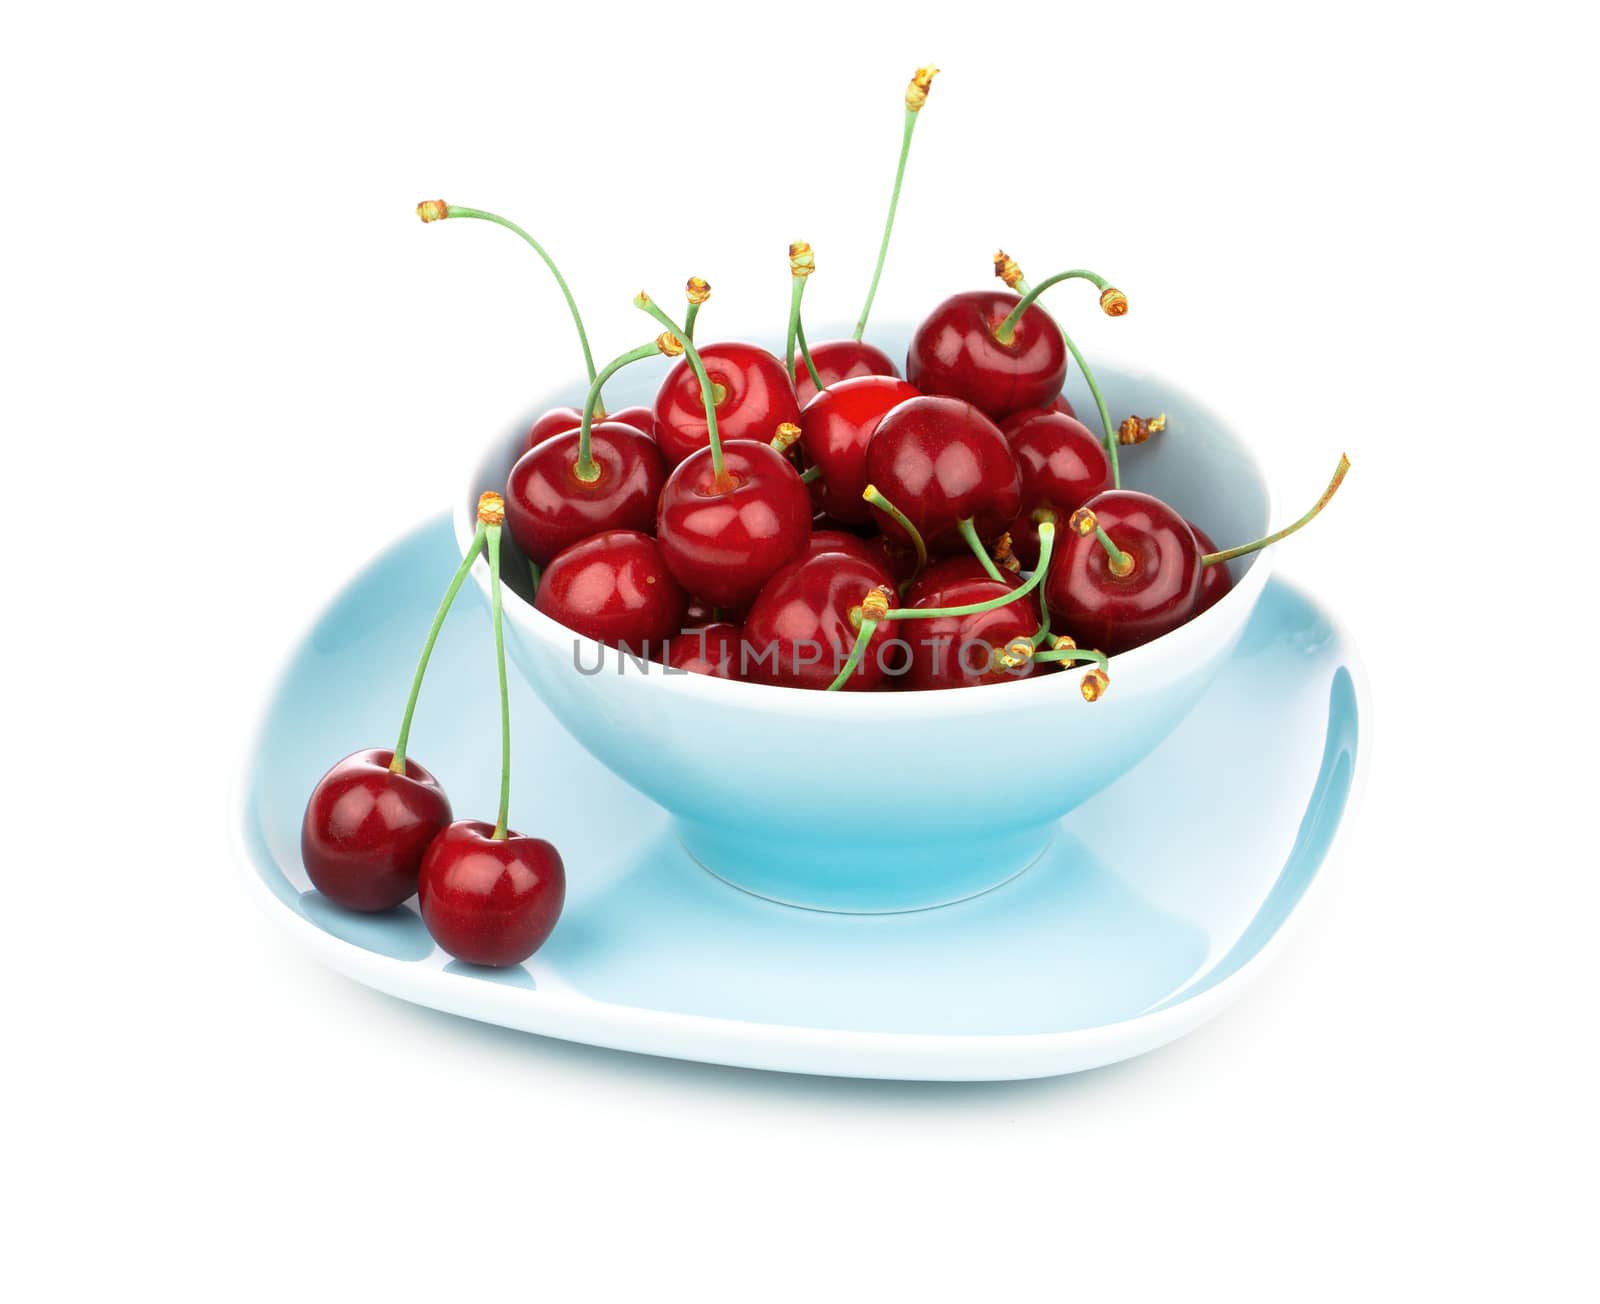 Bowl full of cherries isolated on white background by motorolka